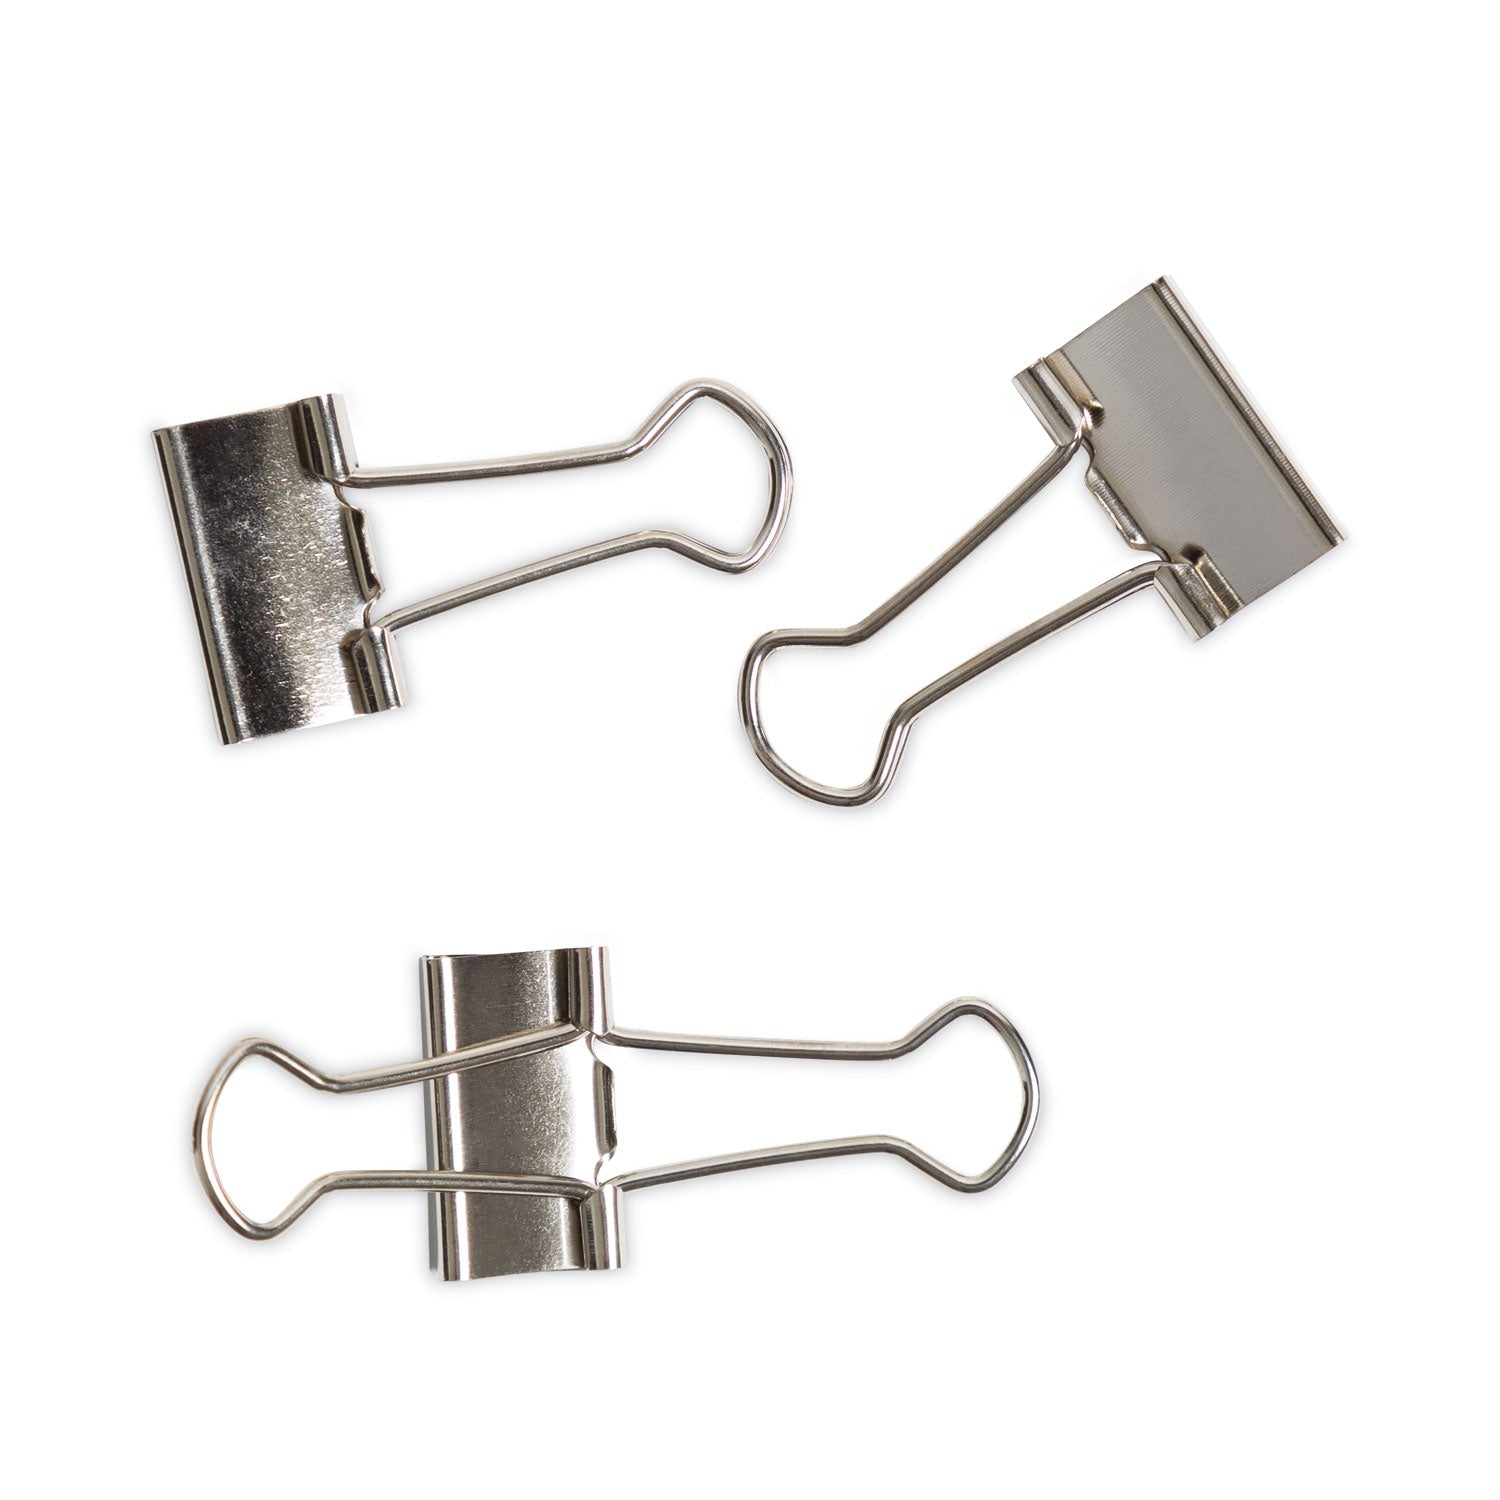 binder-clips-small-silver-72-pack_ubr3602u0624 - 2